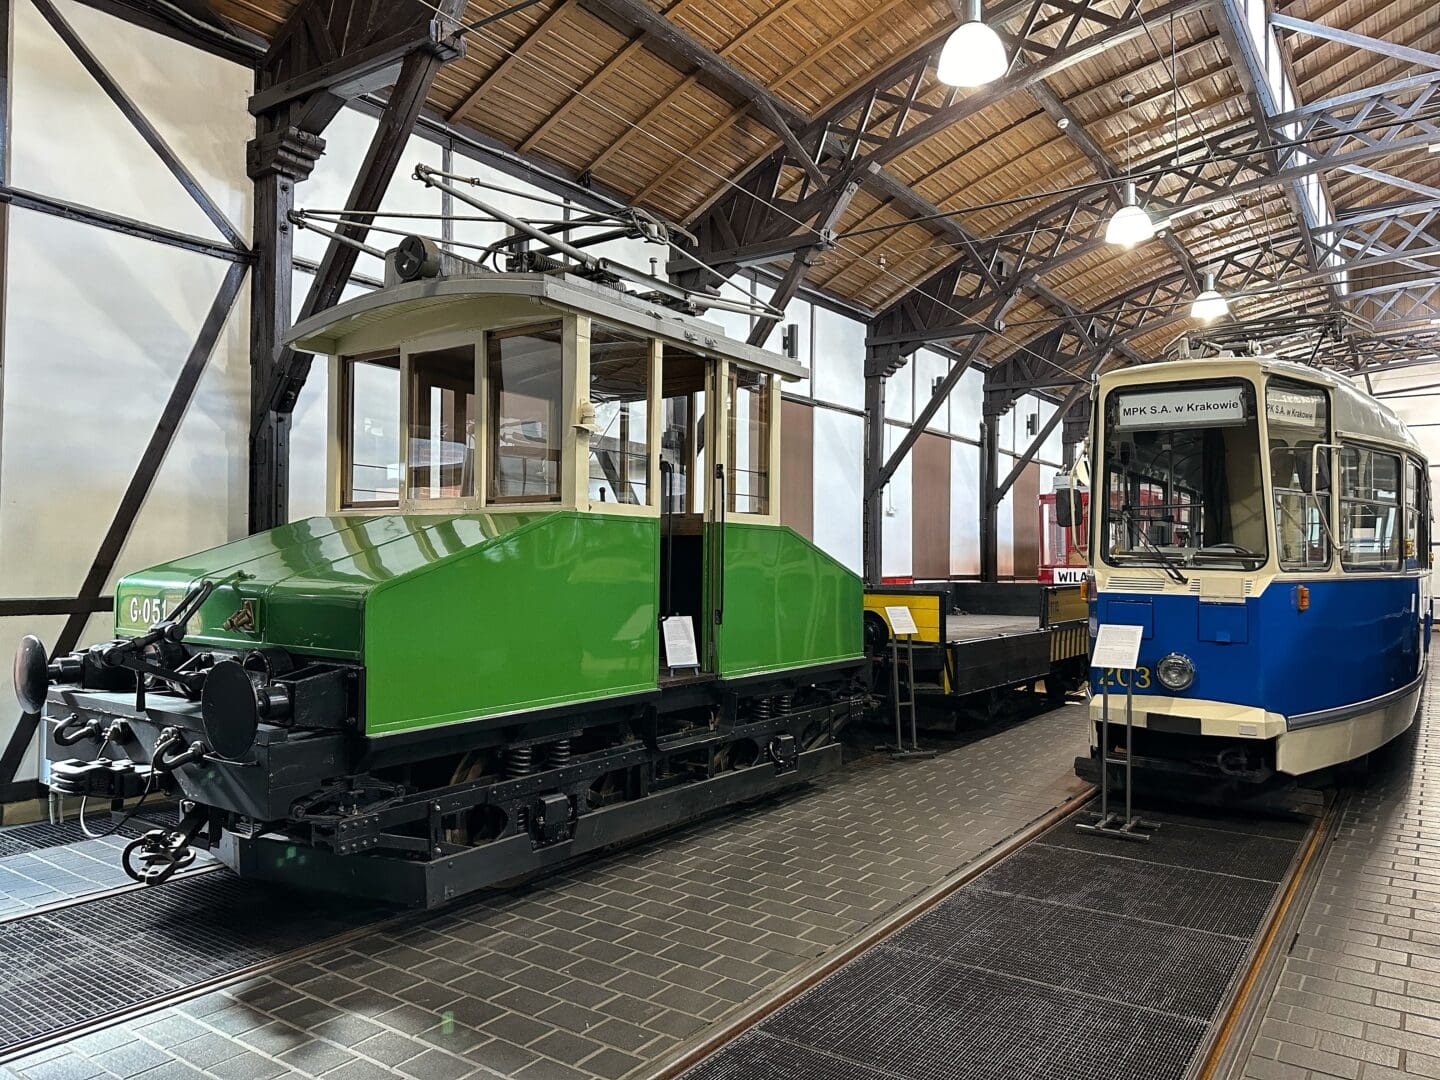 Museum in Krakow tram depot